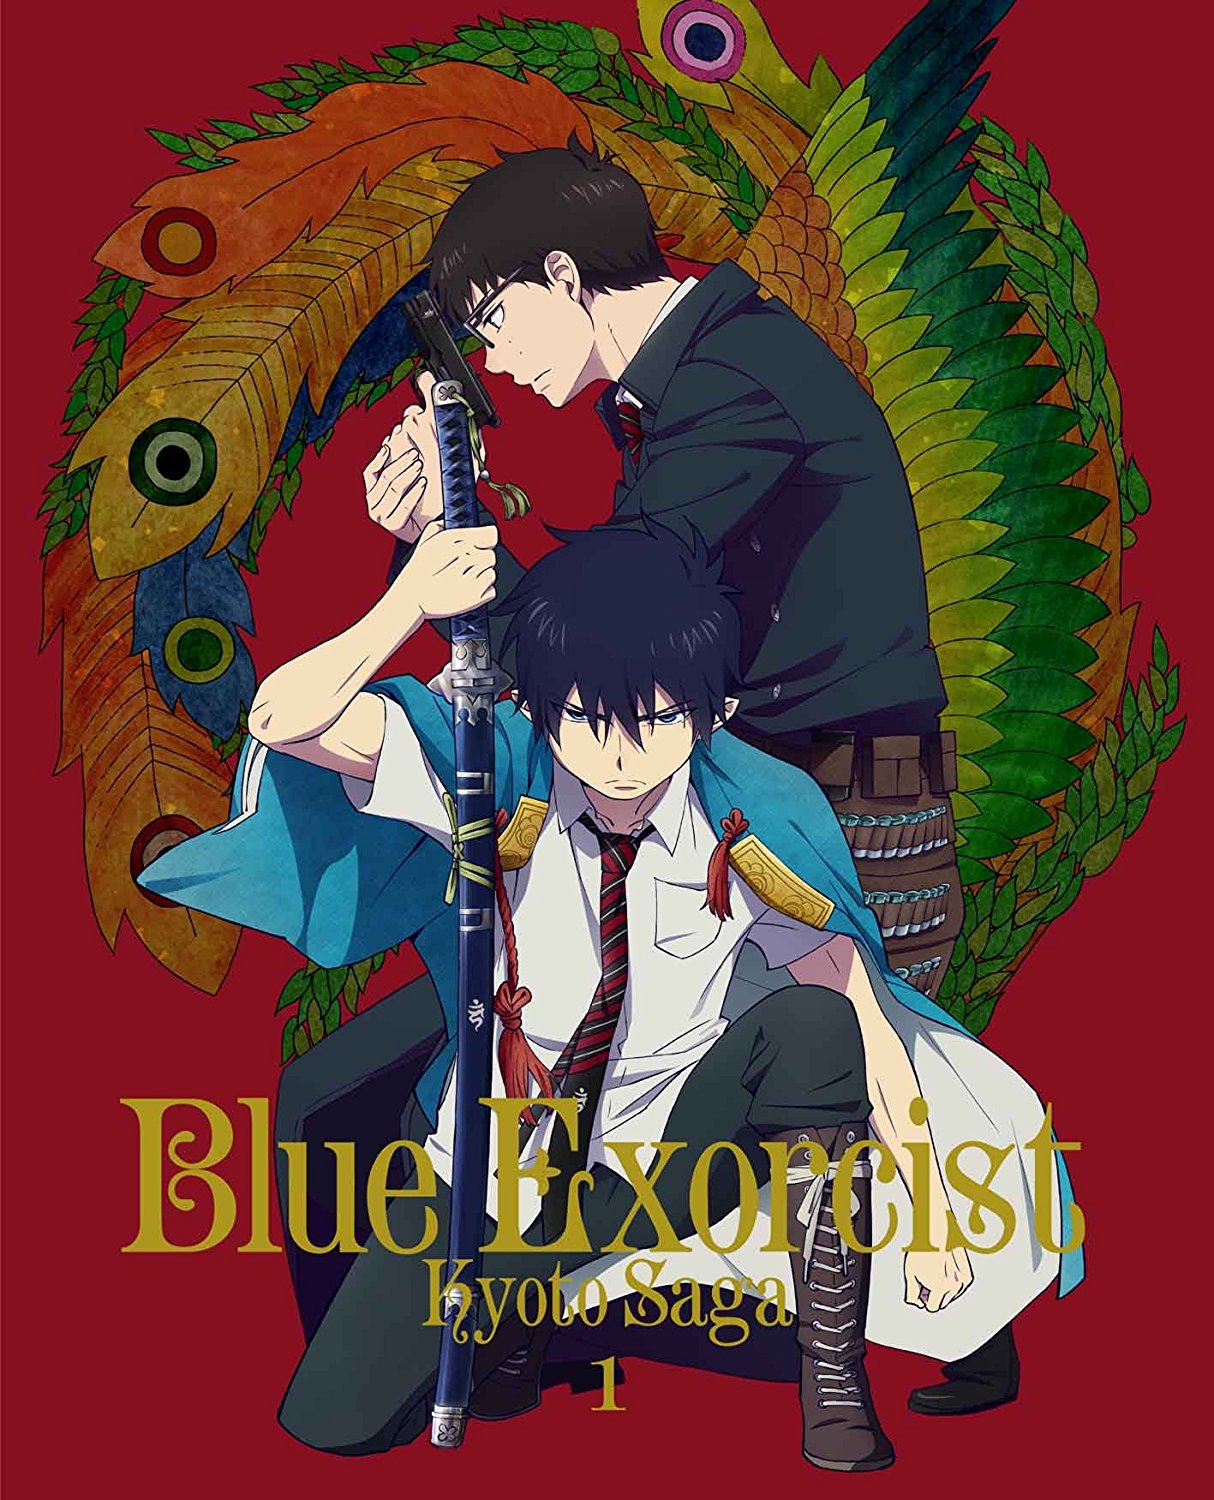 Animation Blue Exorcist Kyoto Saga Vol 1 Cd Ltd Region 2 Japanese Dvd Music Musicjapanet